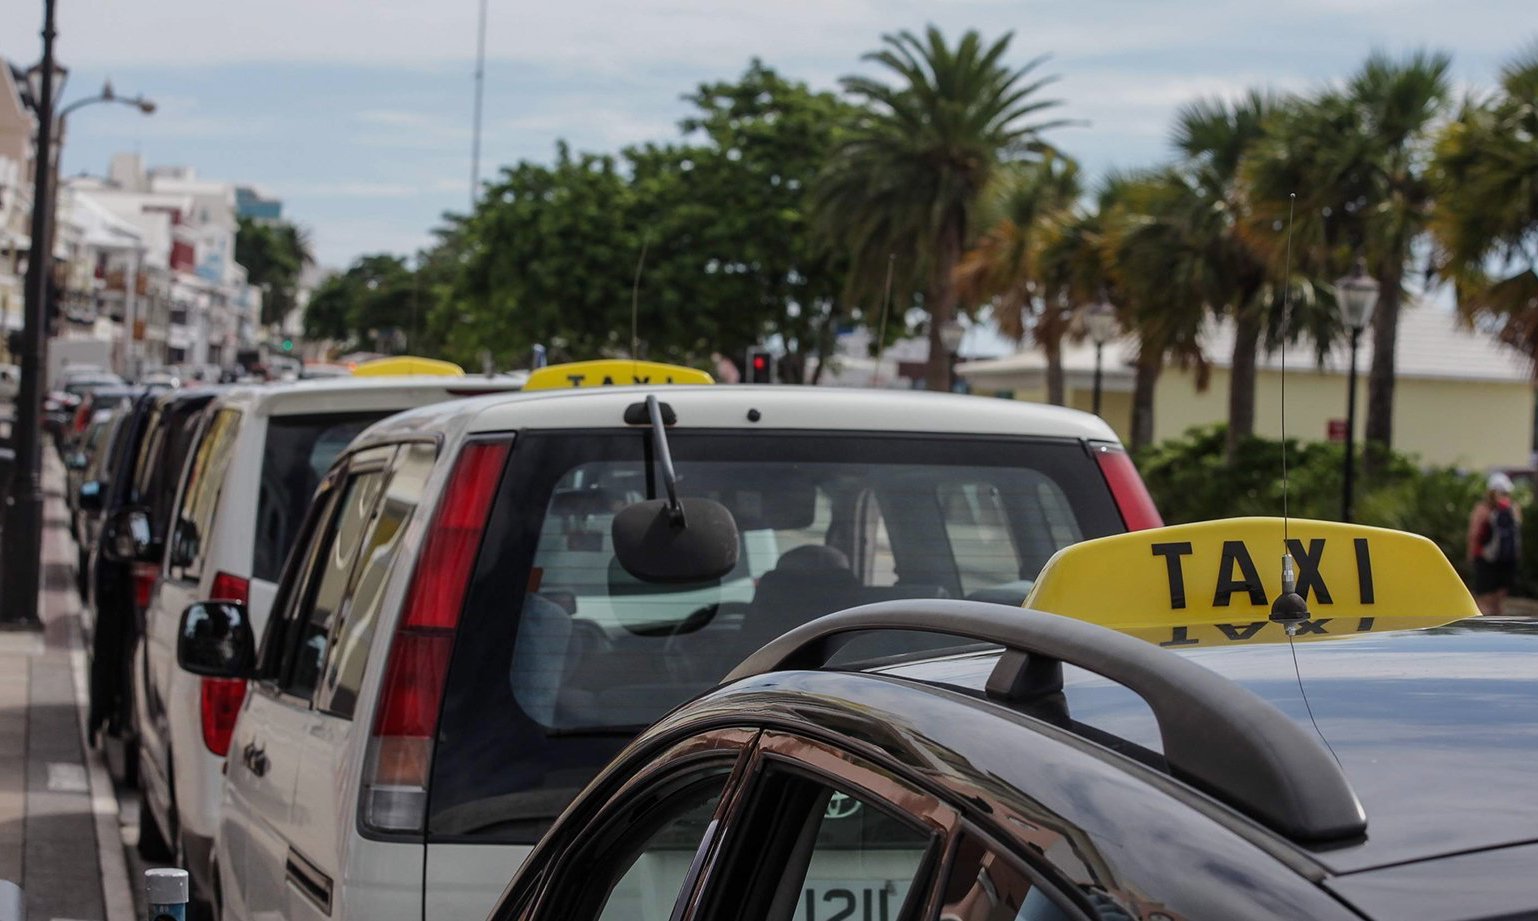 COVID-19 protocols for taxi examinations at TCD